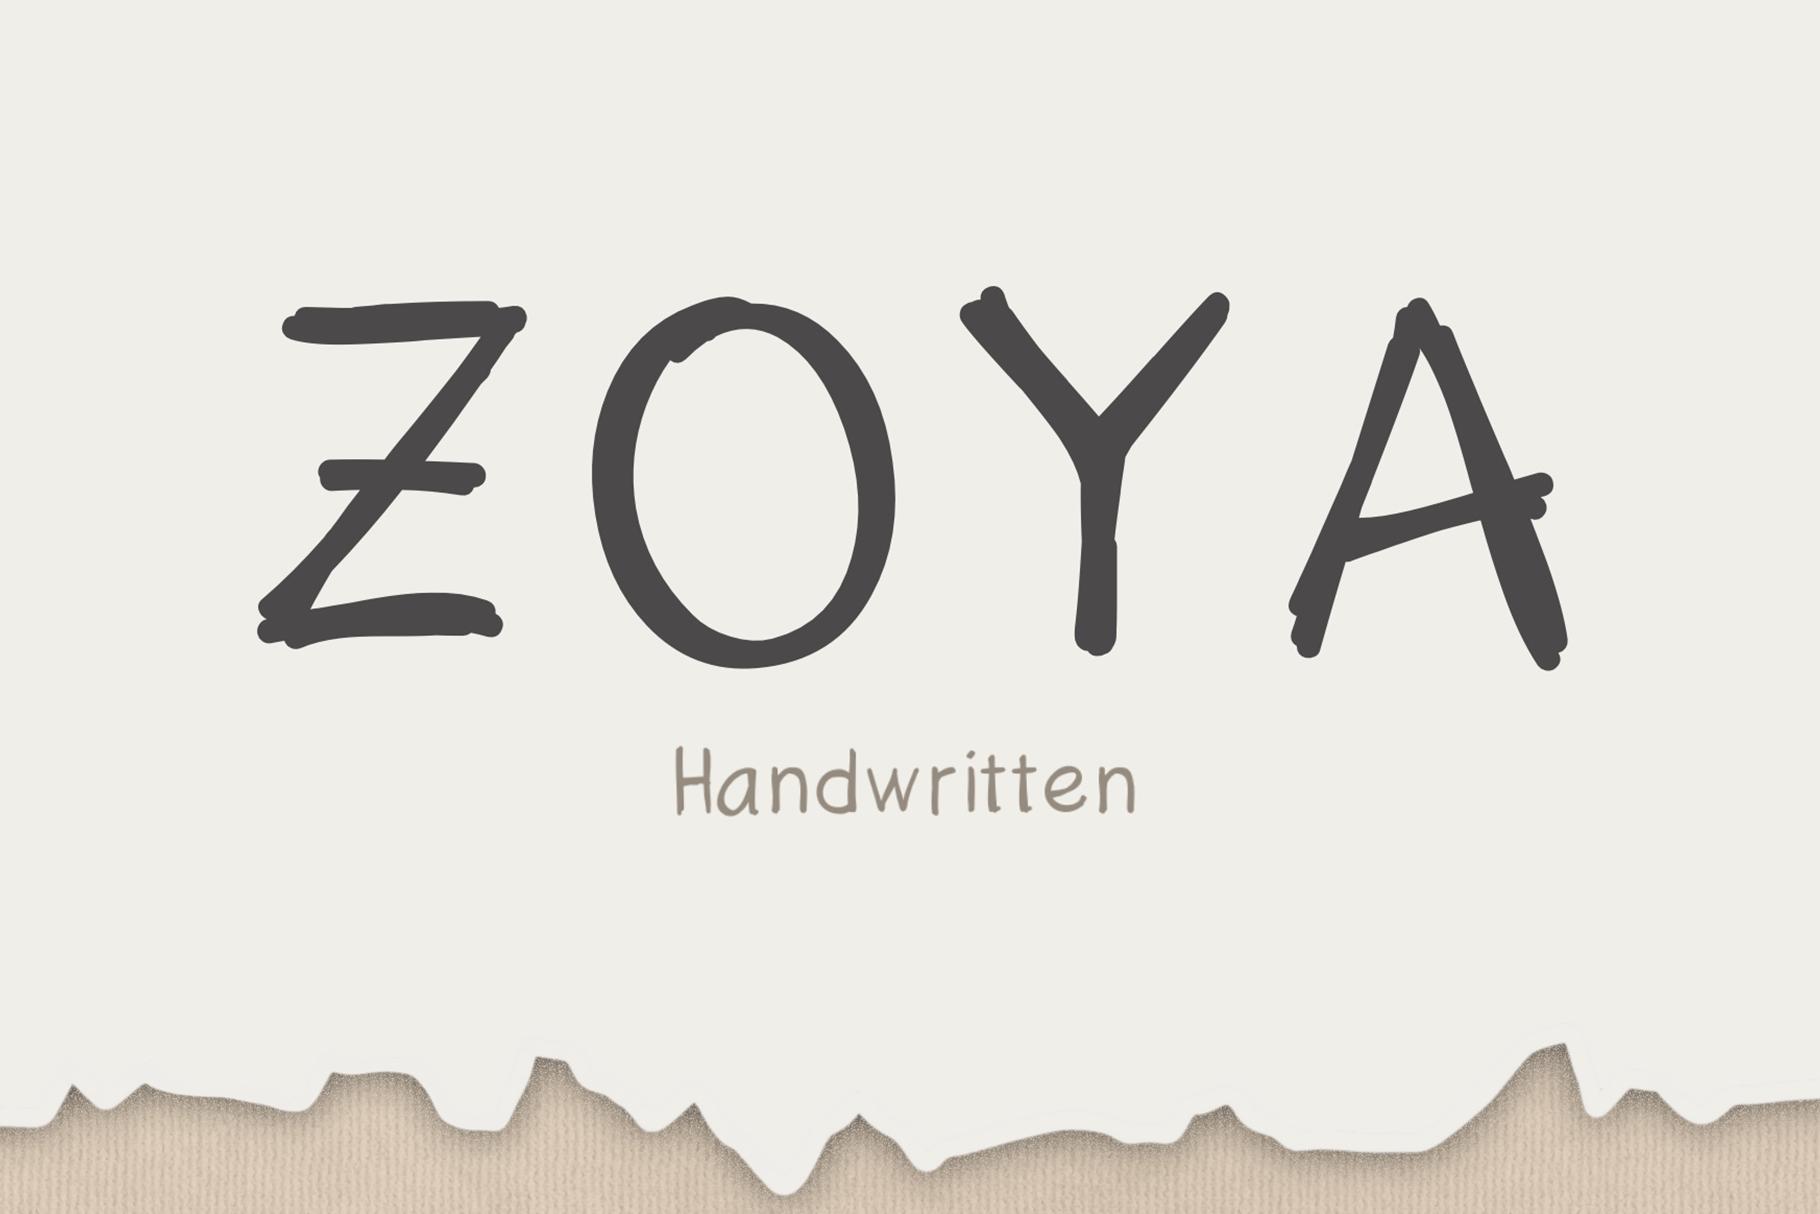 Zoya Font